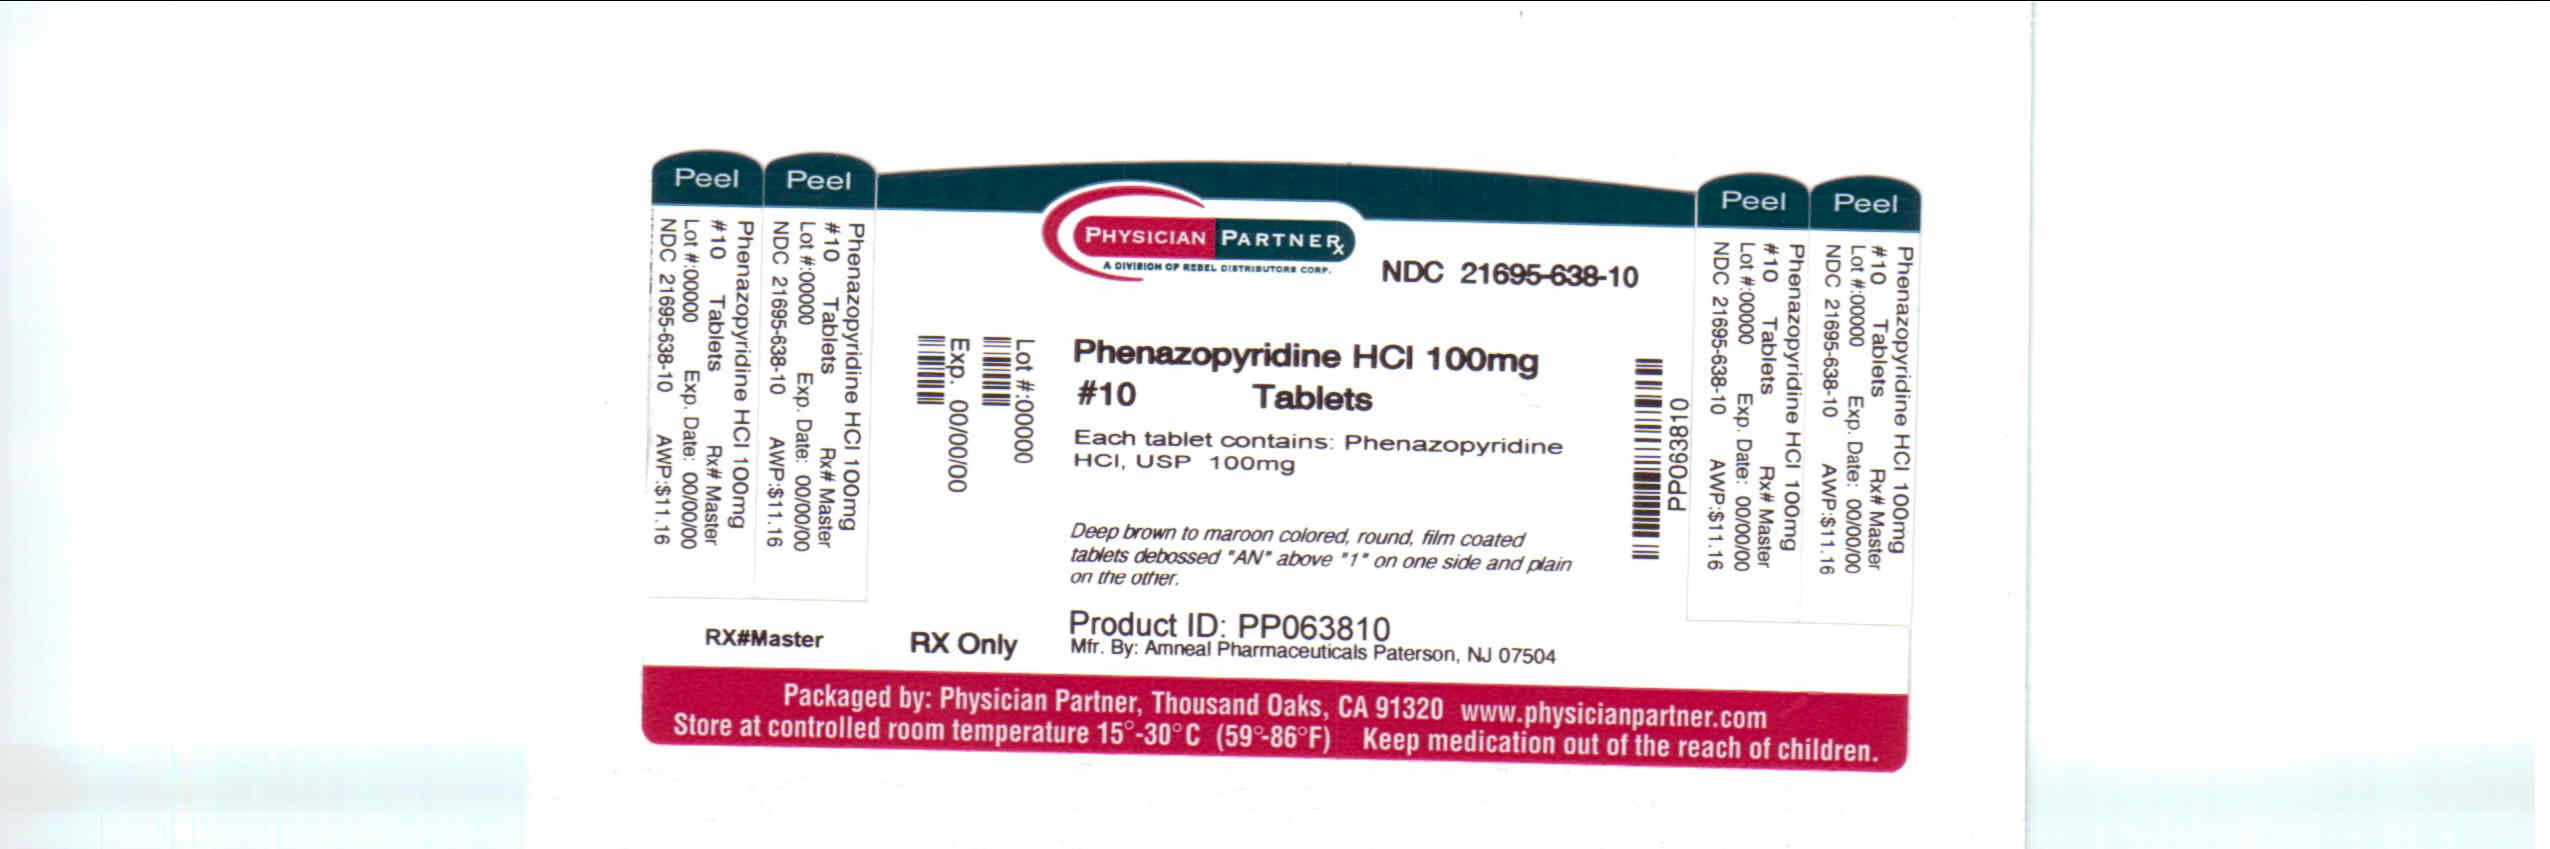 Phenazopyridine HCl 100mg